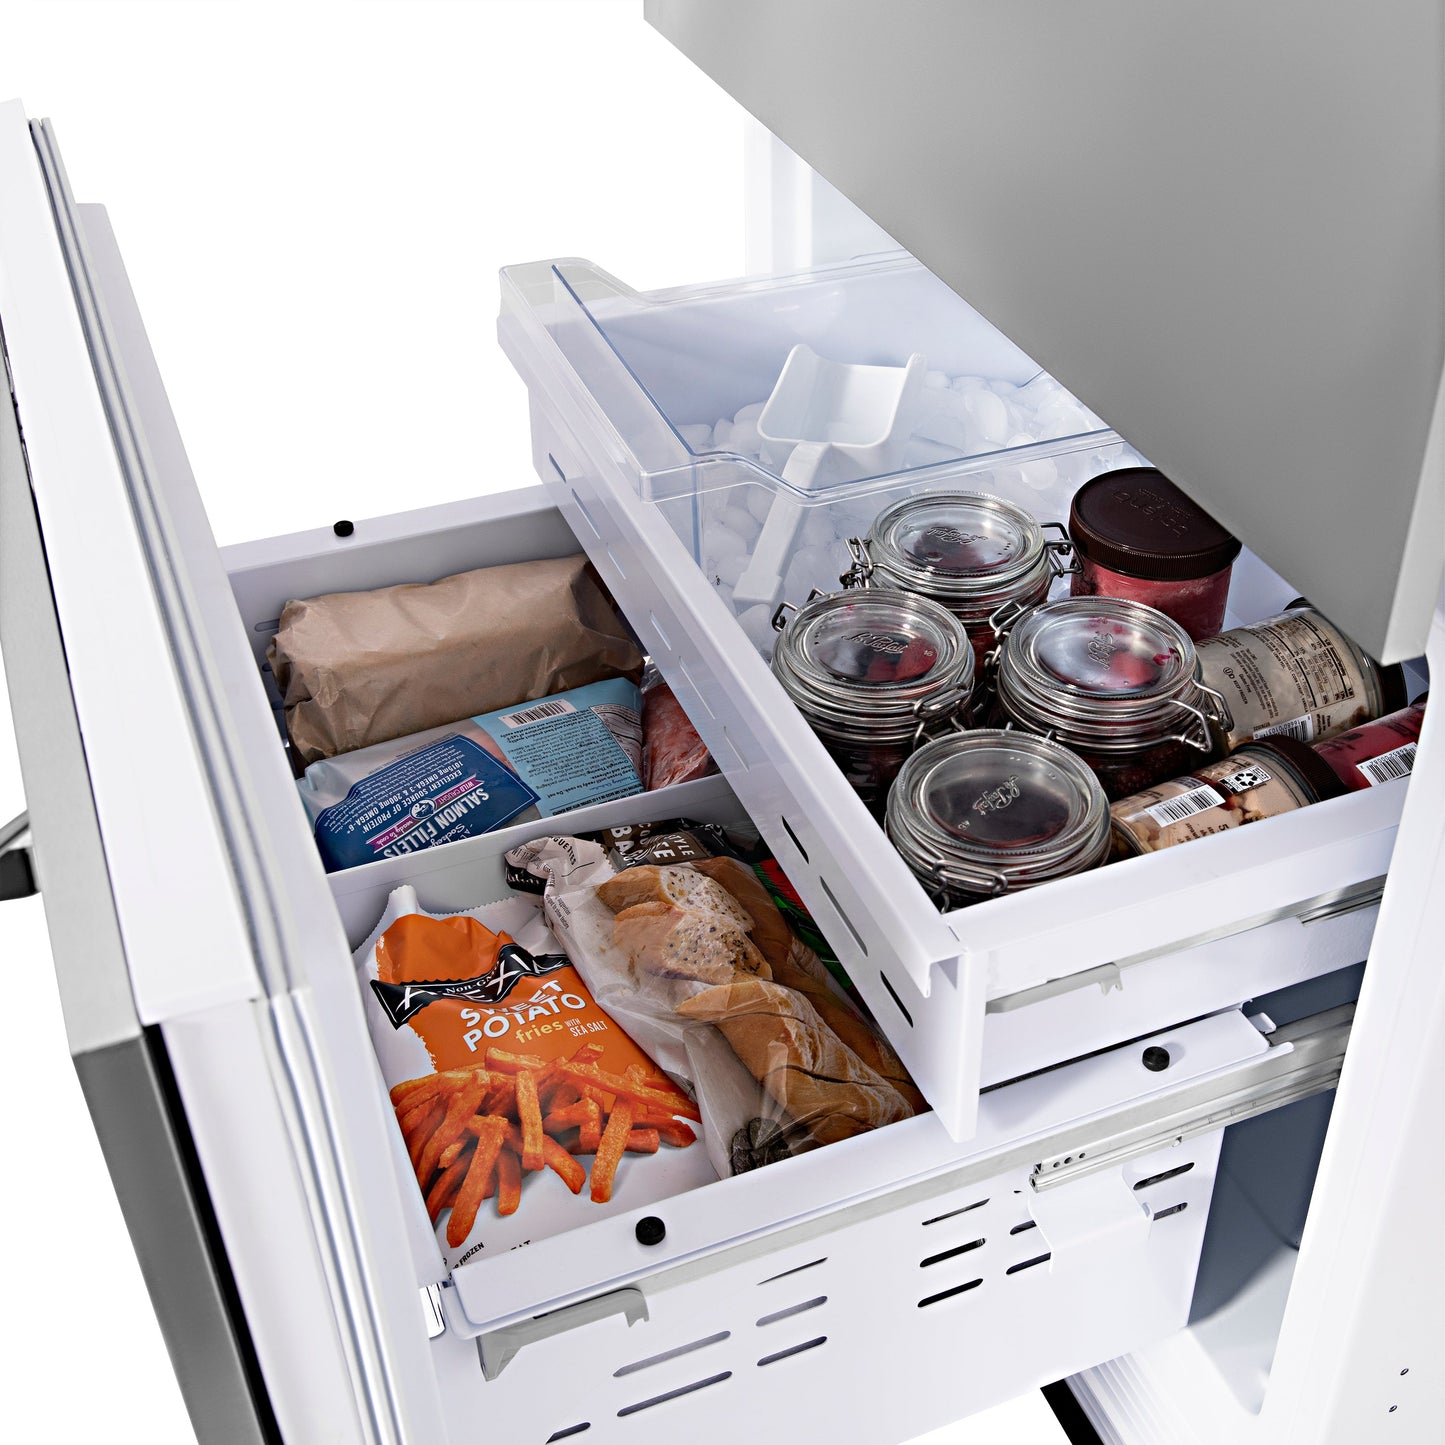 ZLINE 30 In. 16.1 cu. ft. Built-In 2-Door Bottom Freezer Refrigerator with Internal Water and Ice Dispenser in Stainless Steel, RBIV-304-30